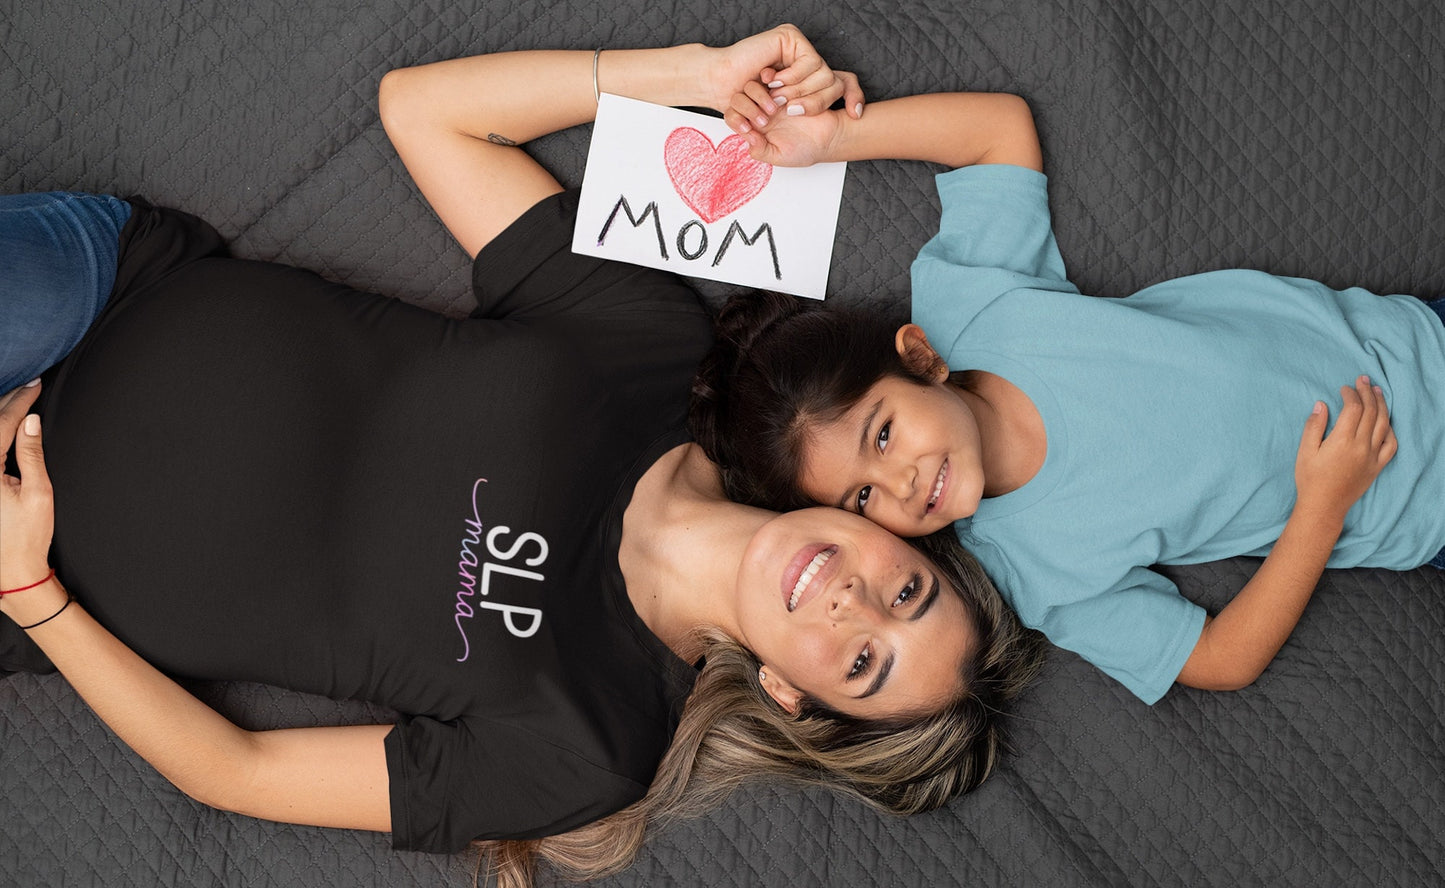 SLP Mama Mother's Day Shirt for Speech Pathologist Mom